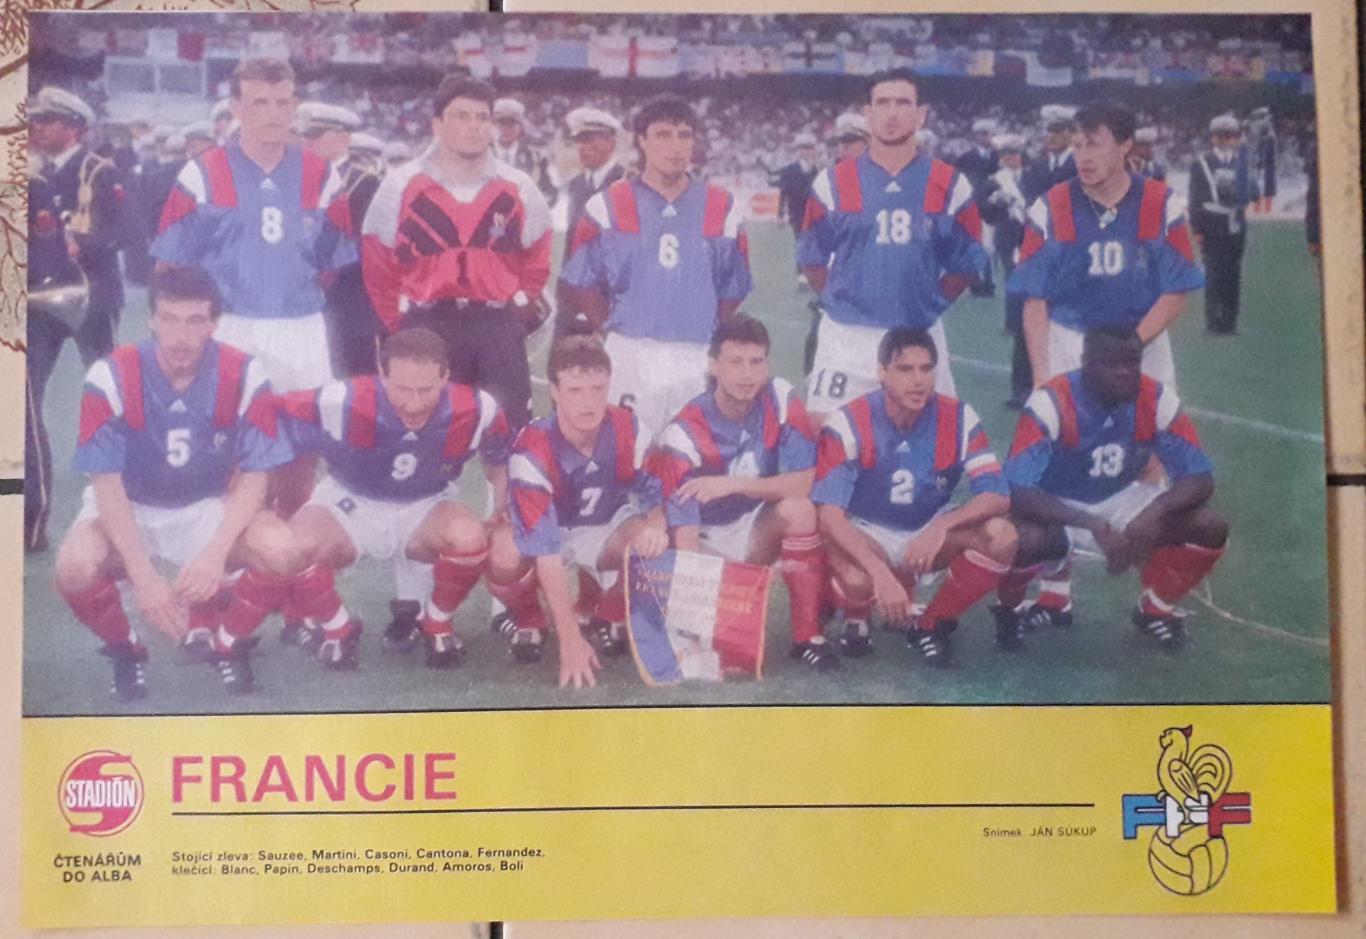 Francie EURO 1992. Плакат формата А4 из журнала Stadion.